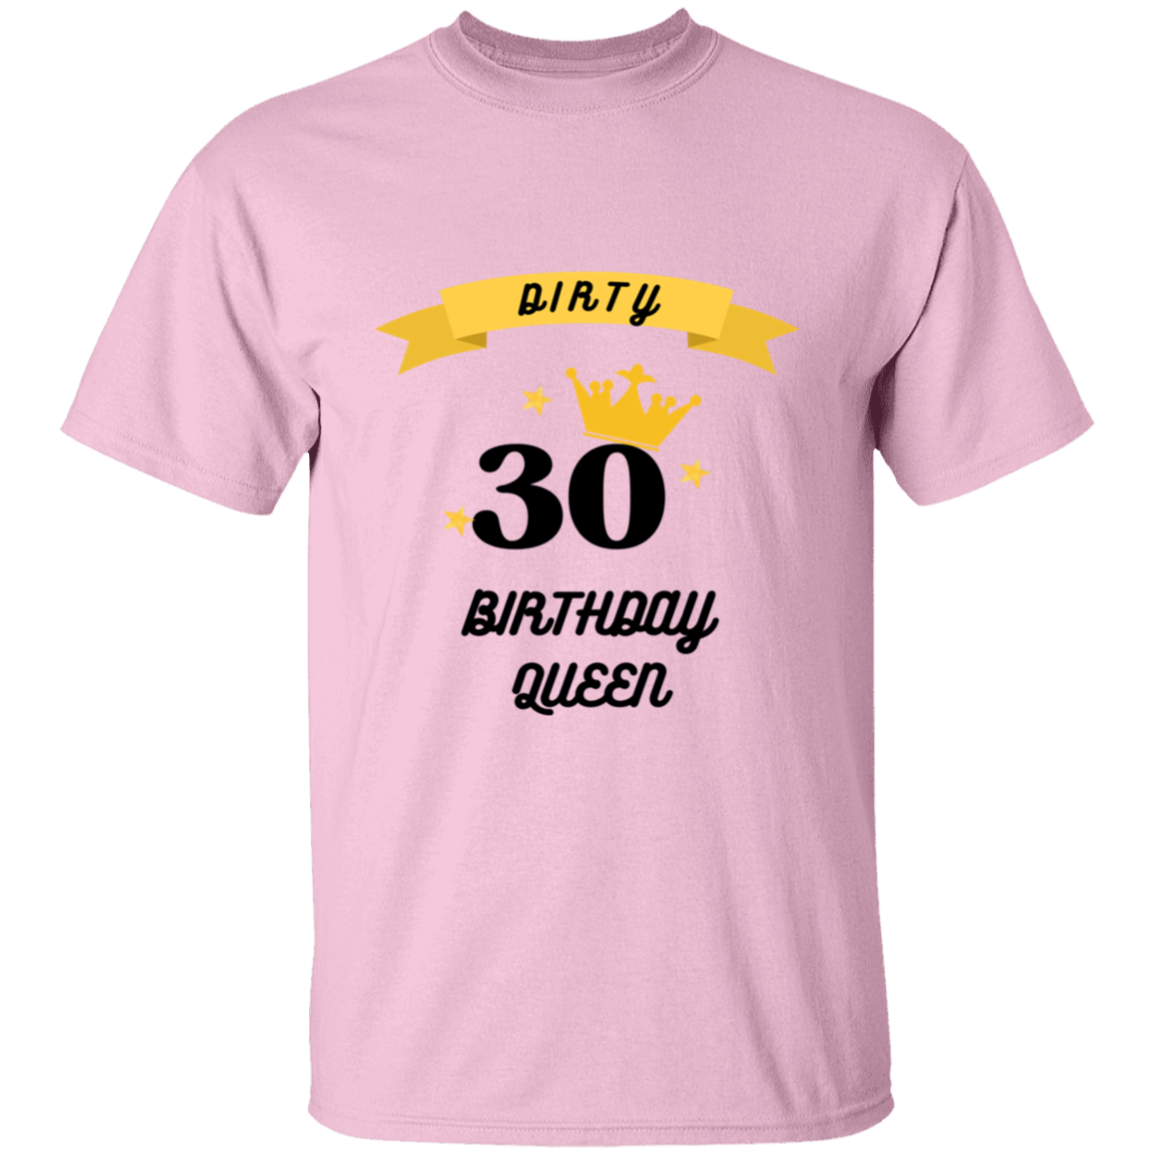 Dirty 30 Birthday Queen T-Shirt